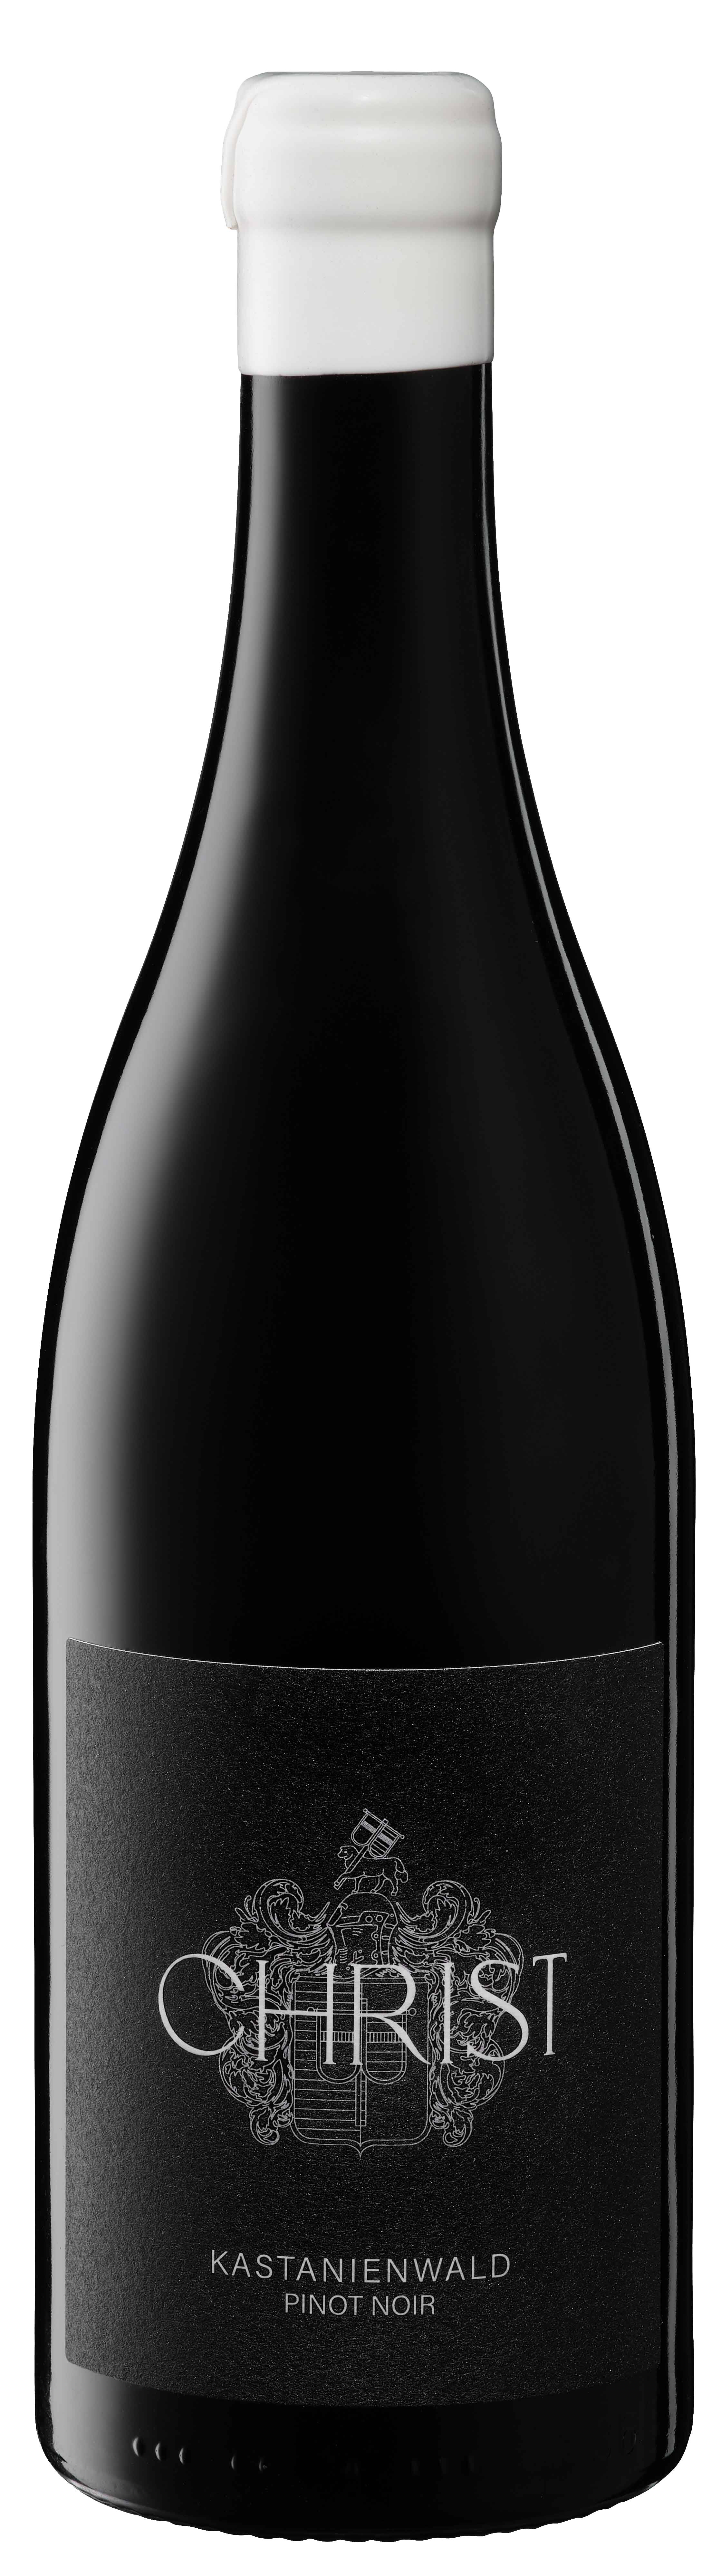 Kastanienwald Pinot Noir